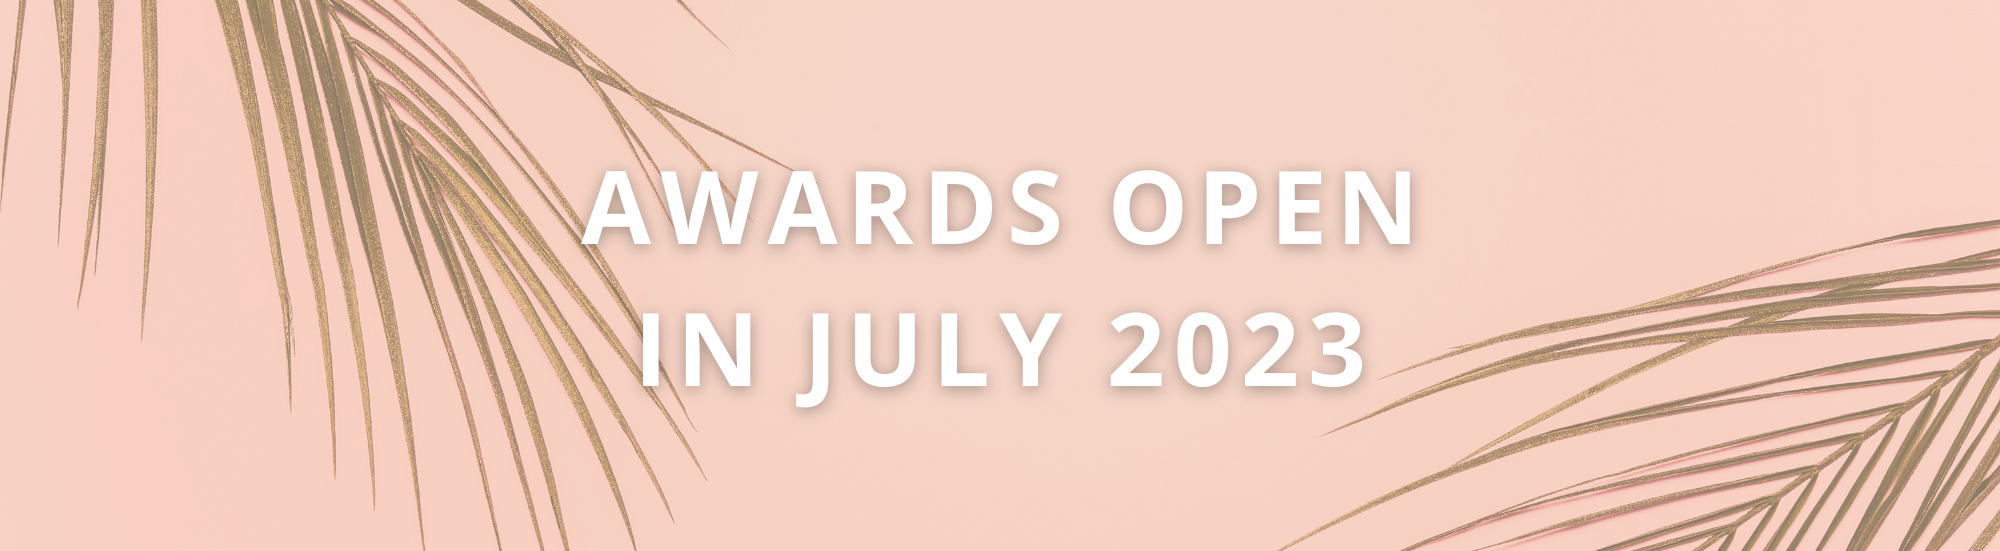 June 2022 - Awards Open